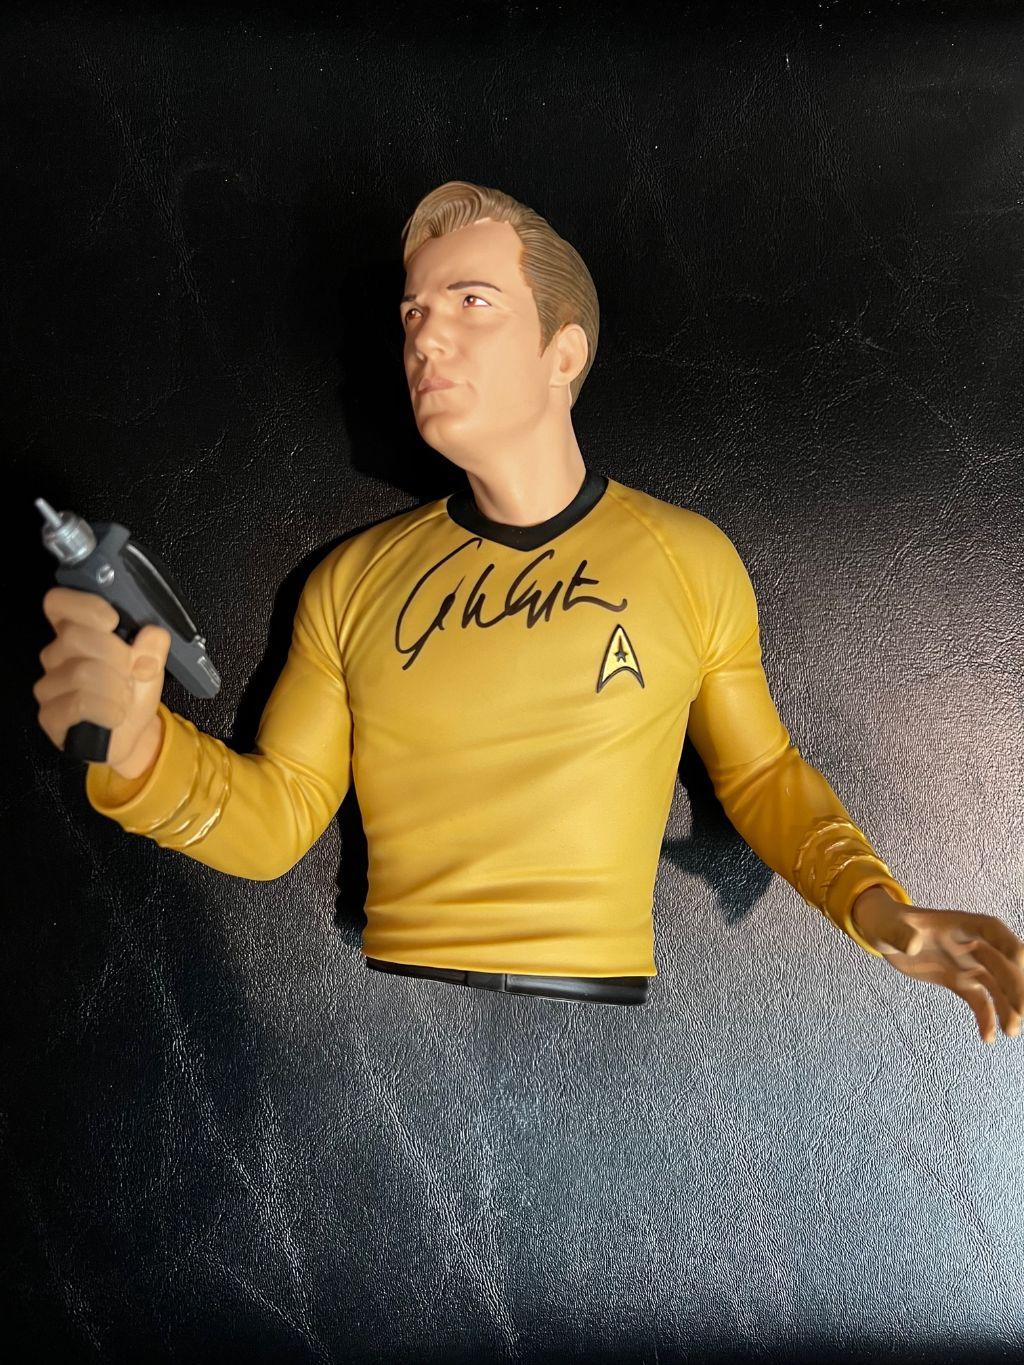 Captain Kirk Bank - signed by Mr. Shatner